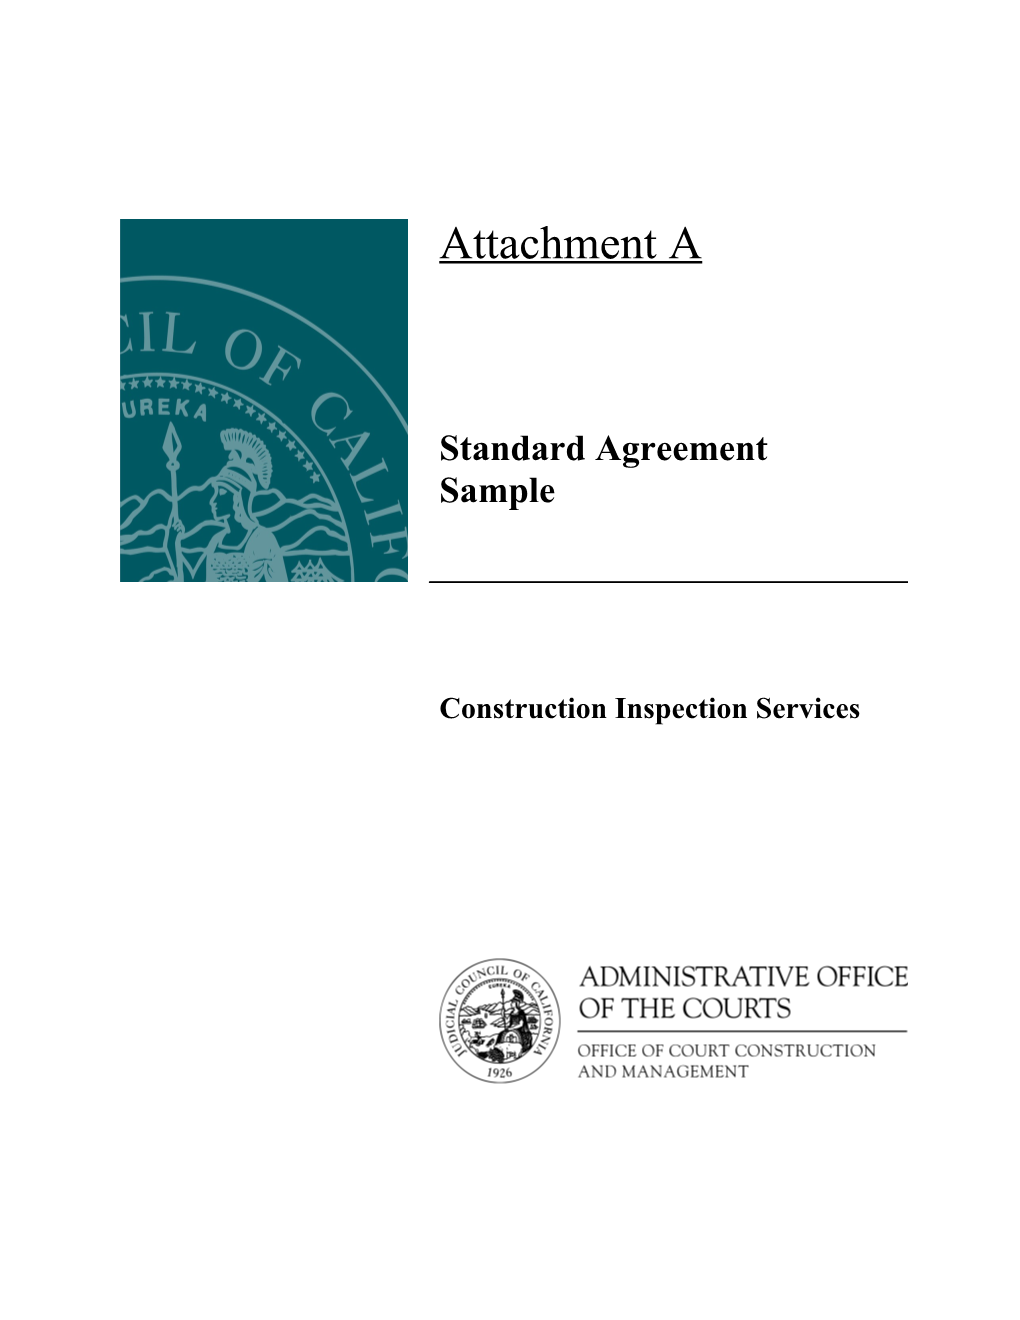 Standard Agreement Sample